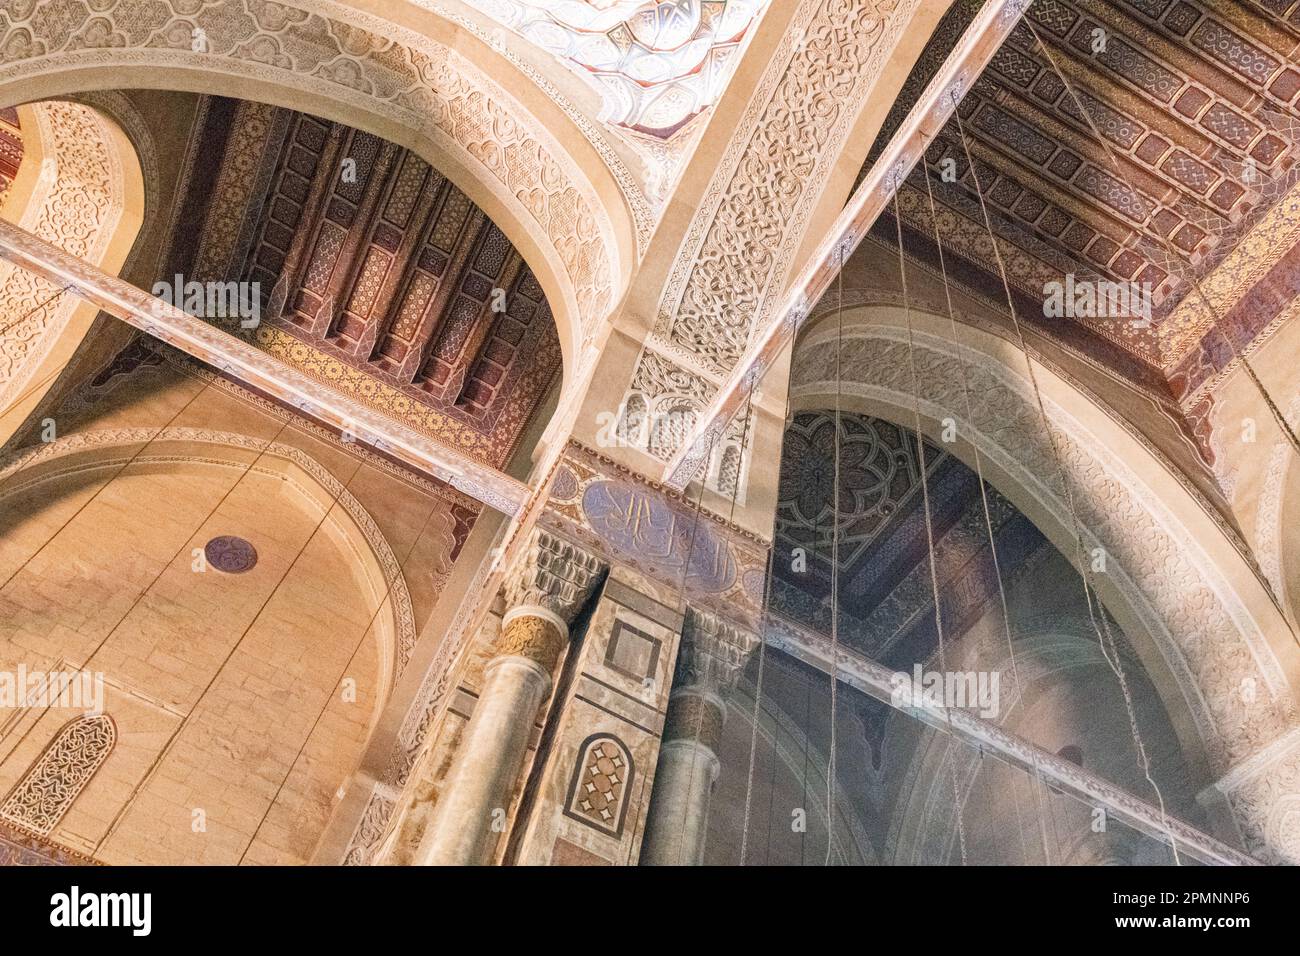 The architecture inside the prayer hall of Al-Rifai Mosque in Cairo, Egypt Stock Photo